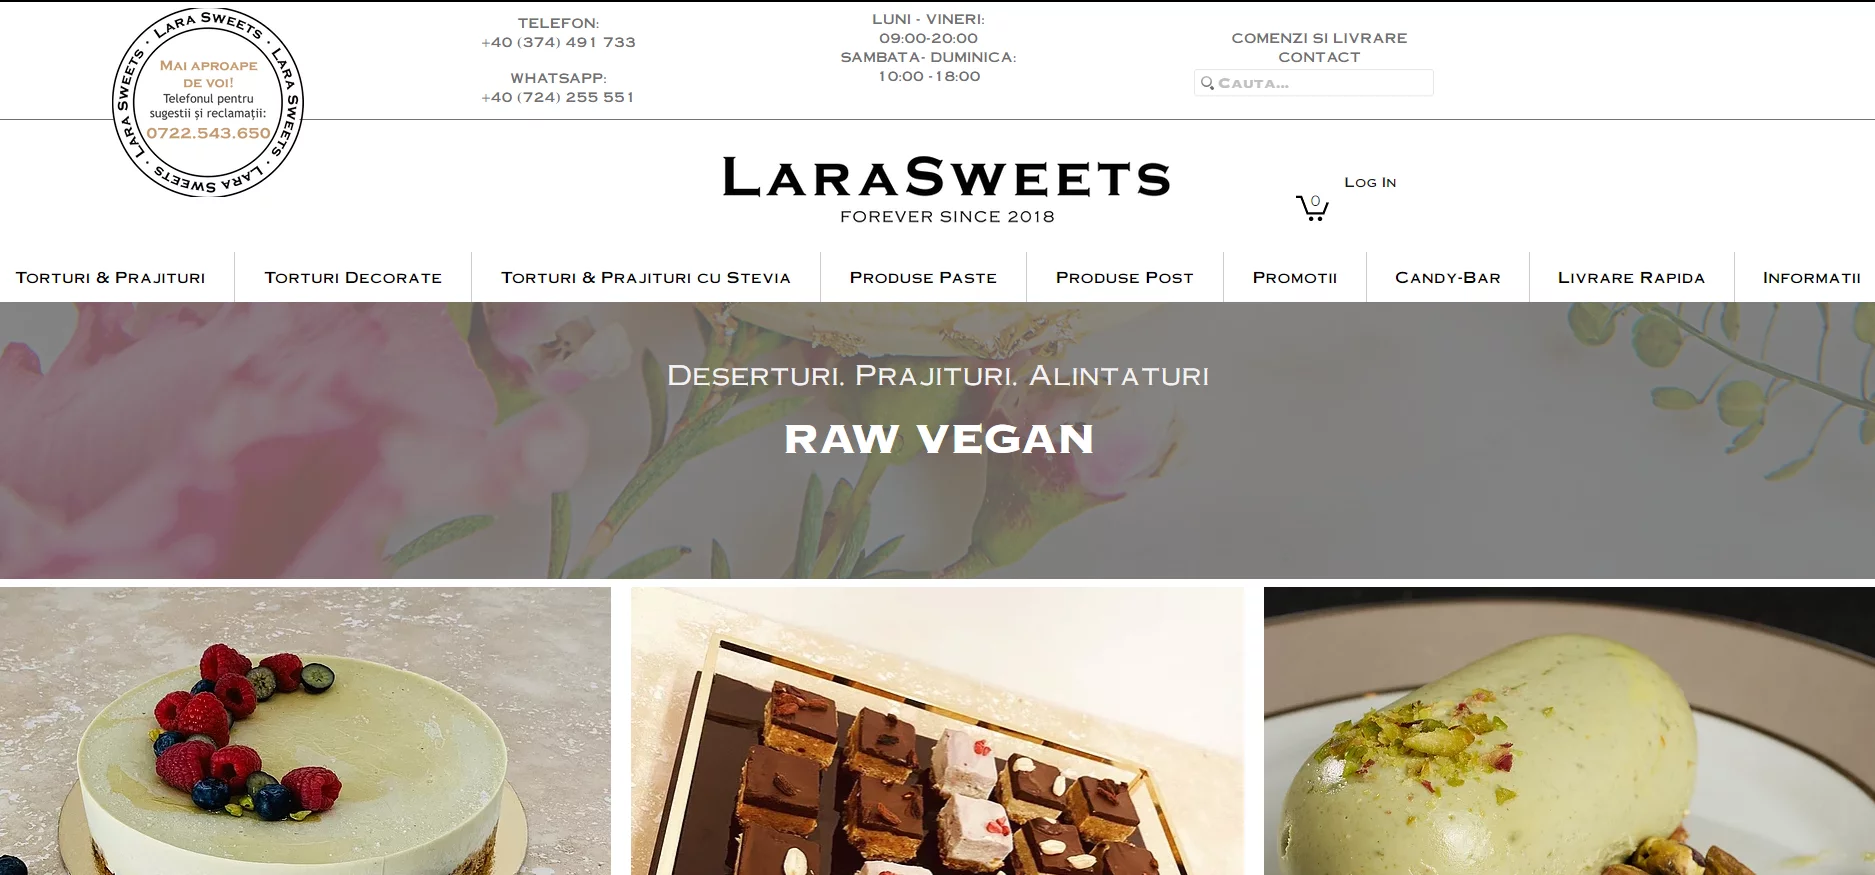 lara sweets web page